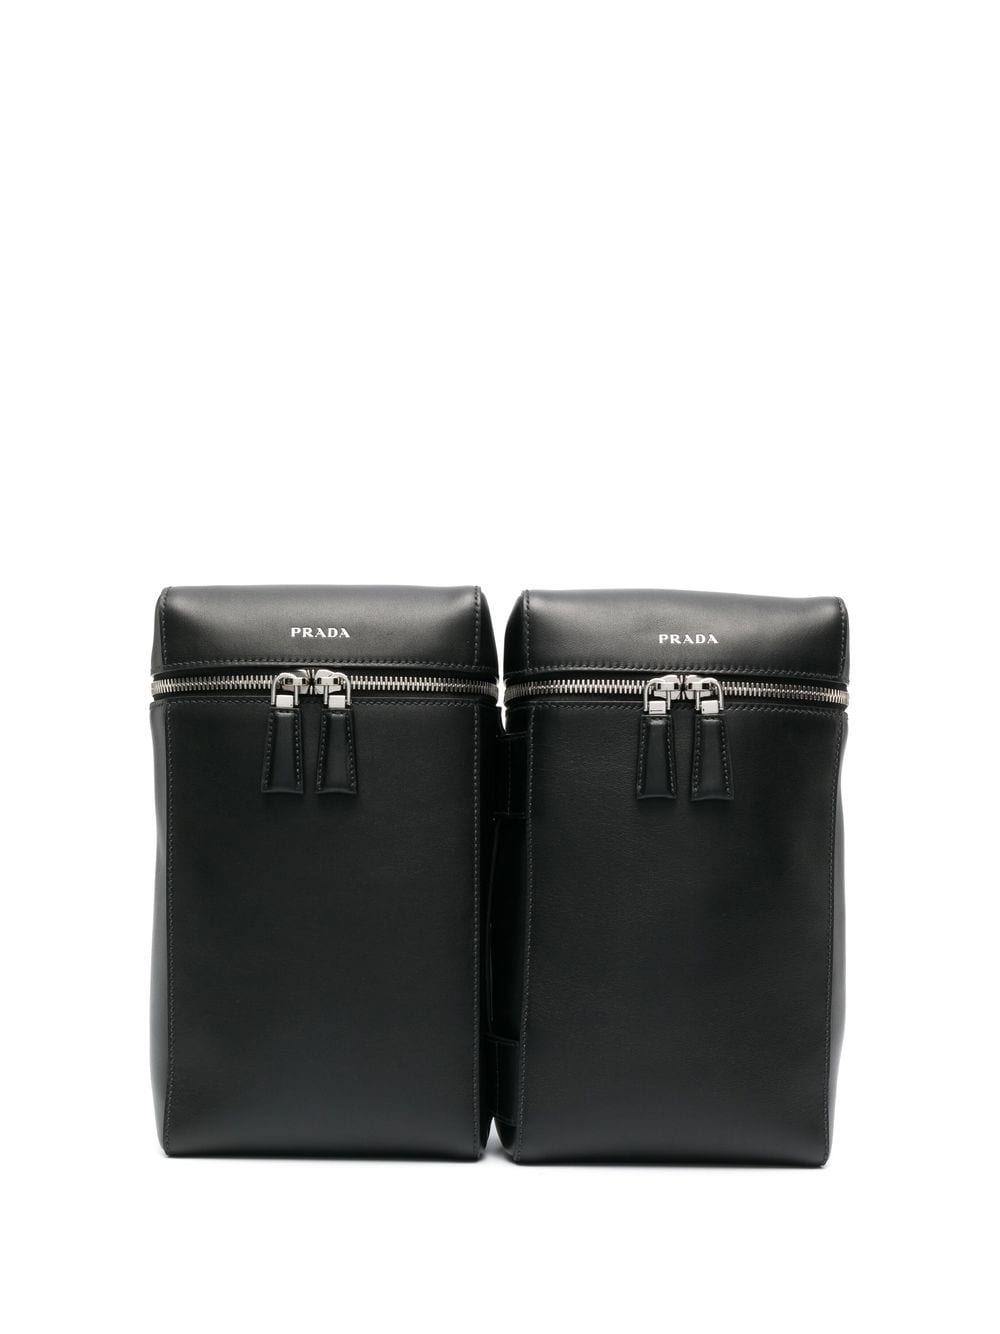 Prada Double leather backpack - Black